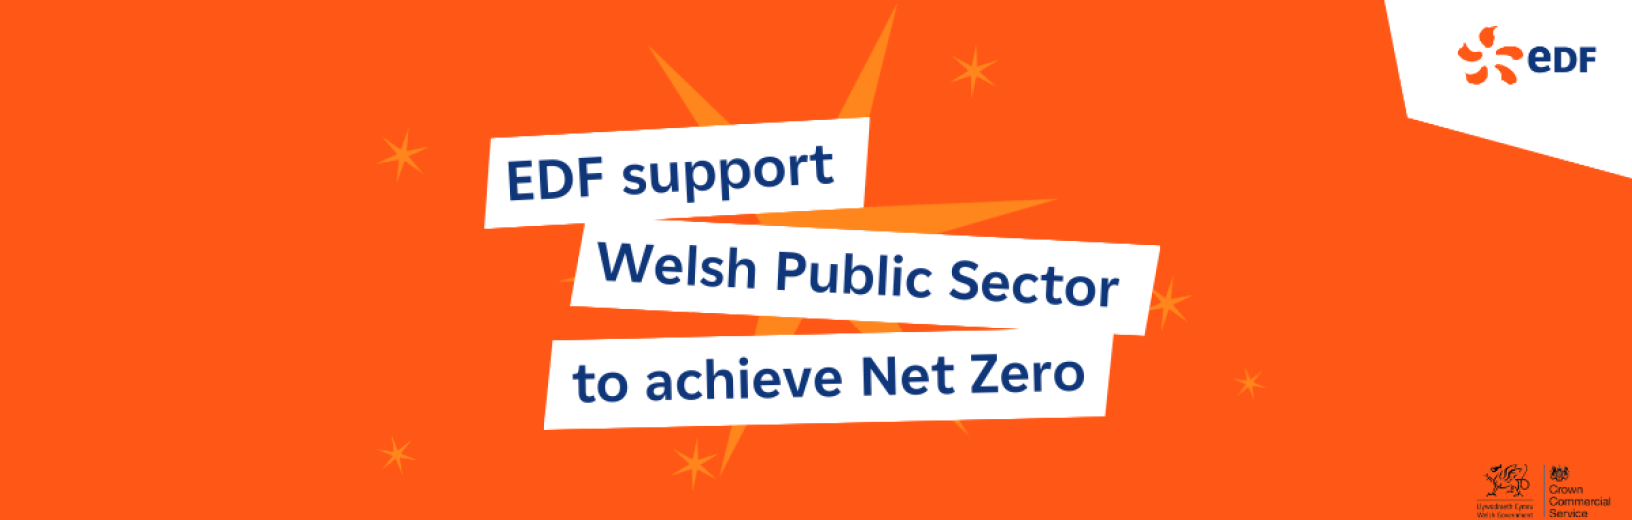 EDF support Welsh Public Sector to achieve Net Zero